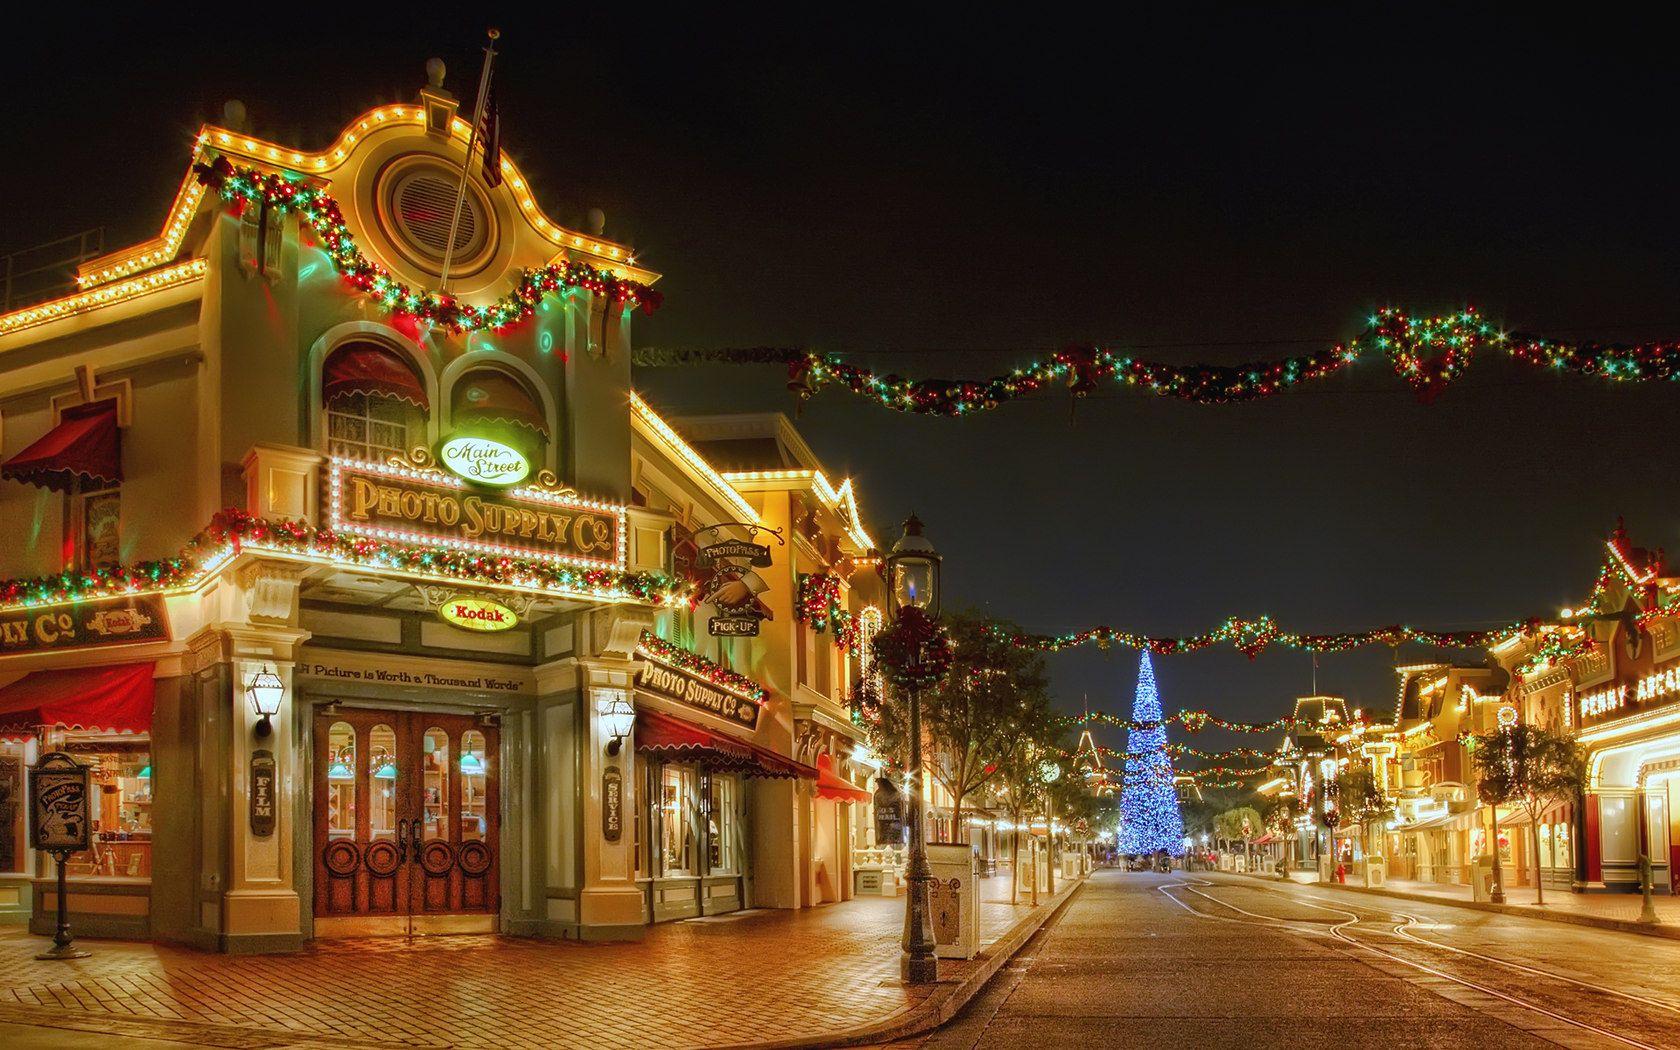 Jnrm image Disneyland Main Street At Christmas Time! HD wallpaper